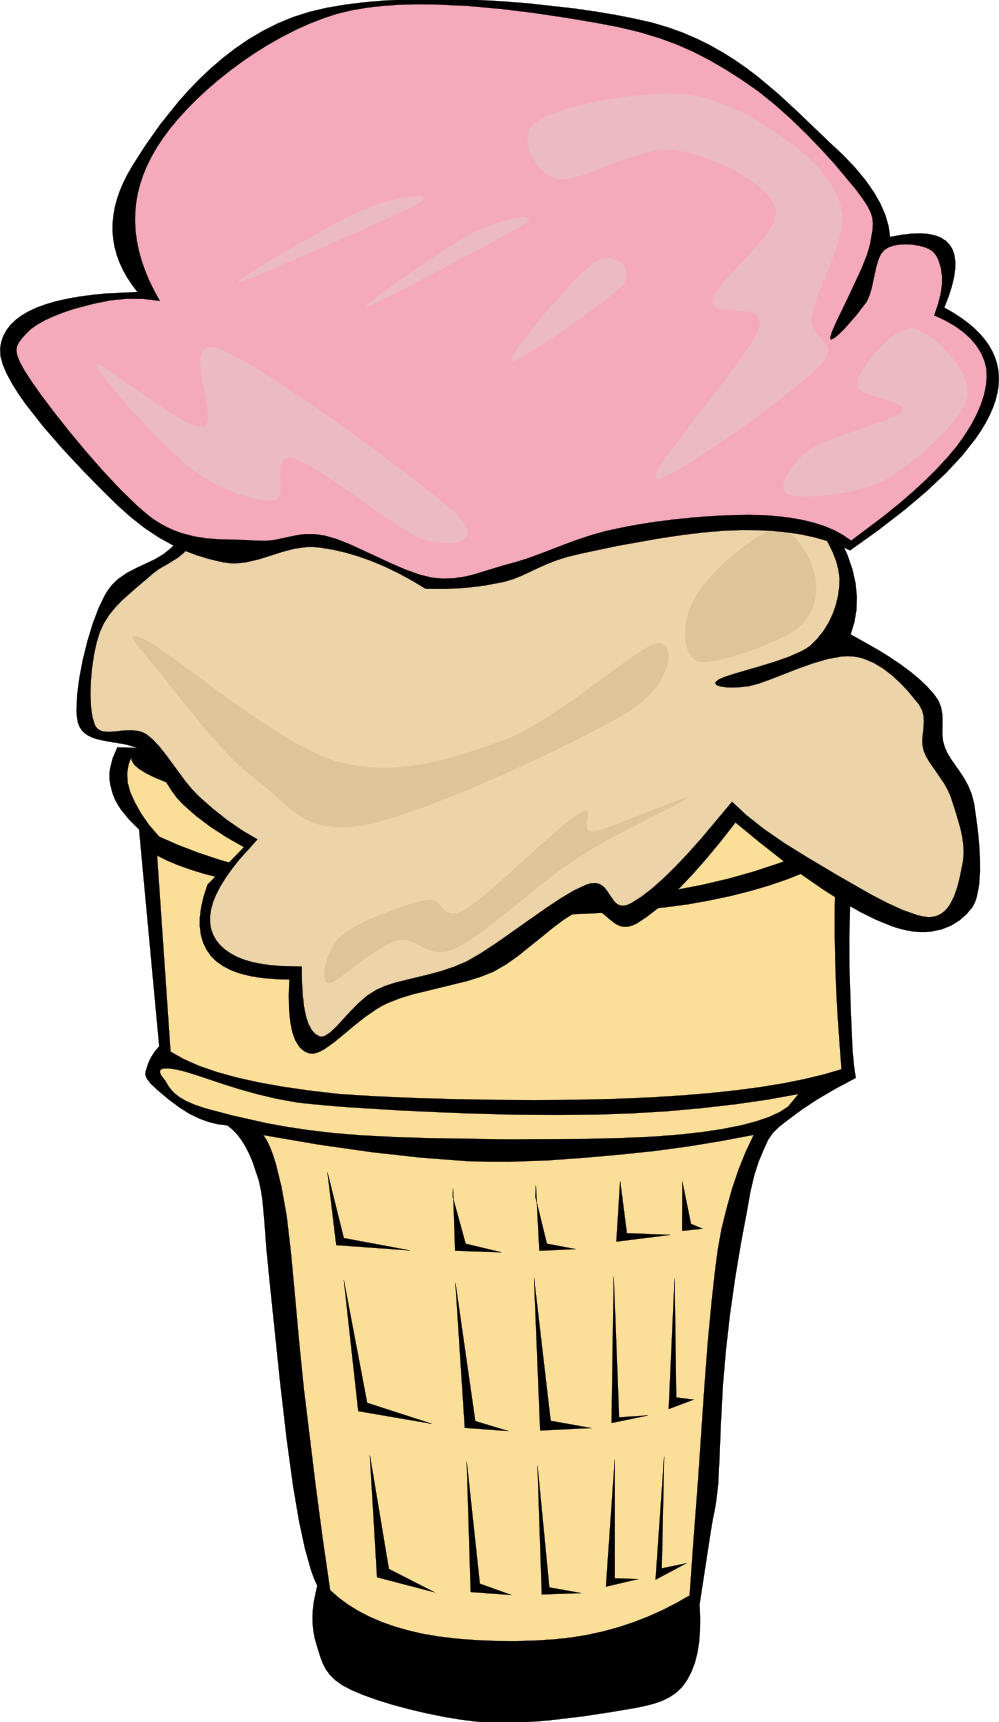 free-images-of-ice-cream-cones-download-free-clip-art-free-clip-art